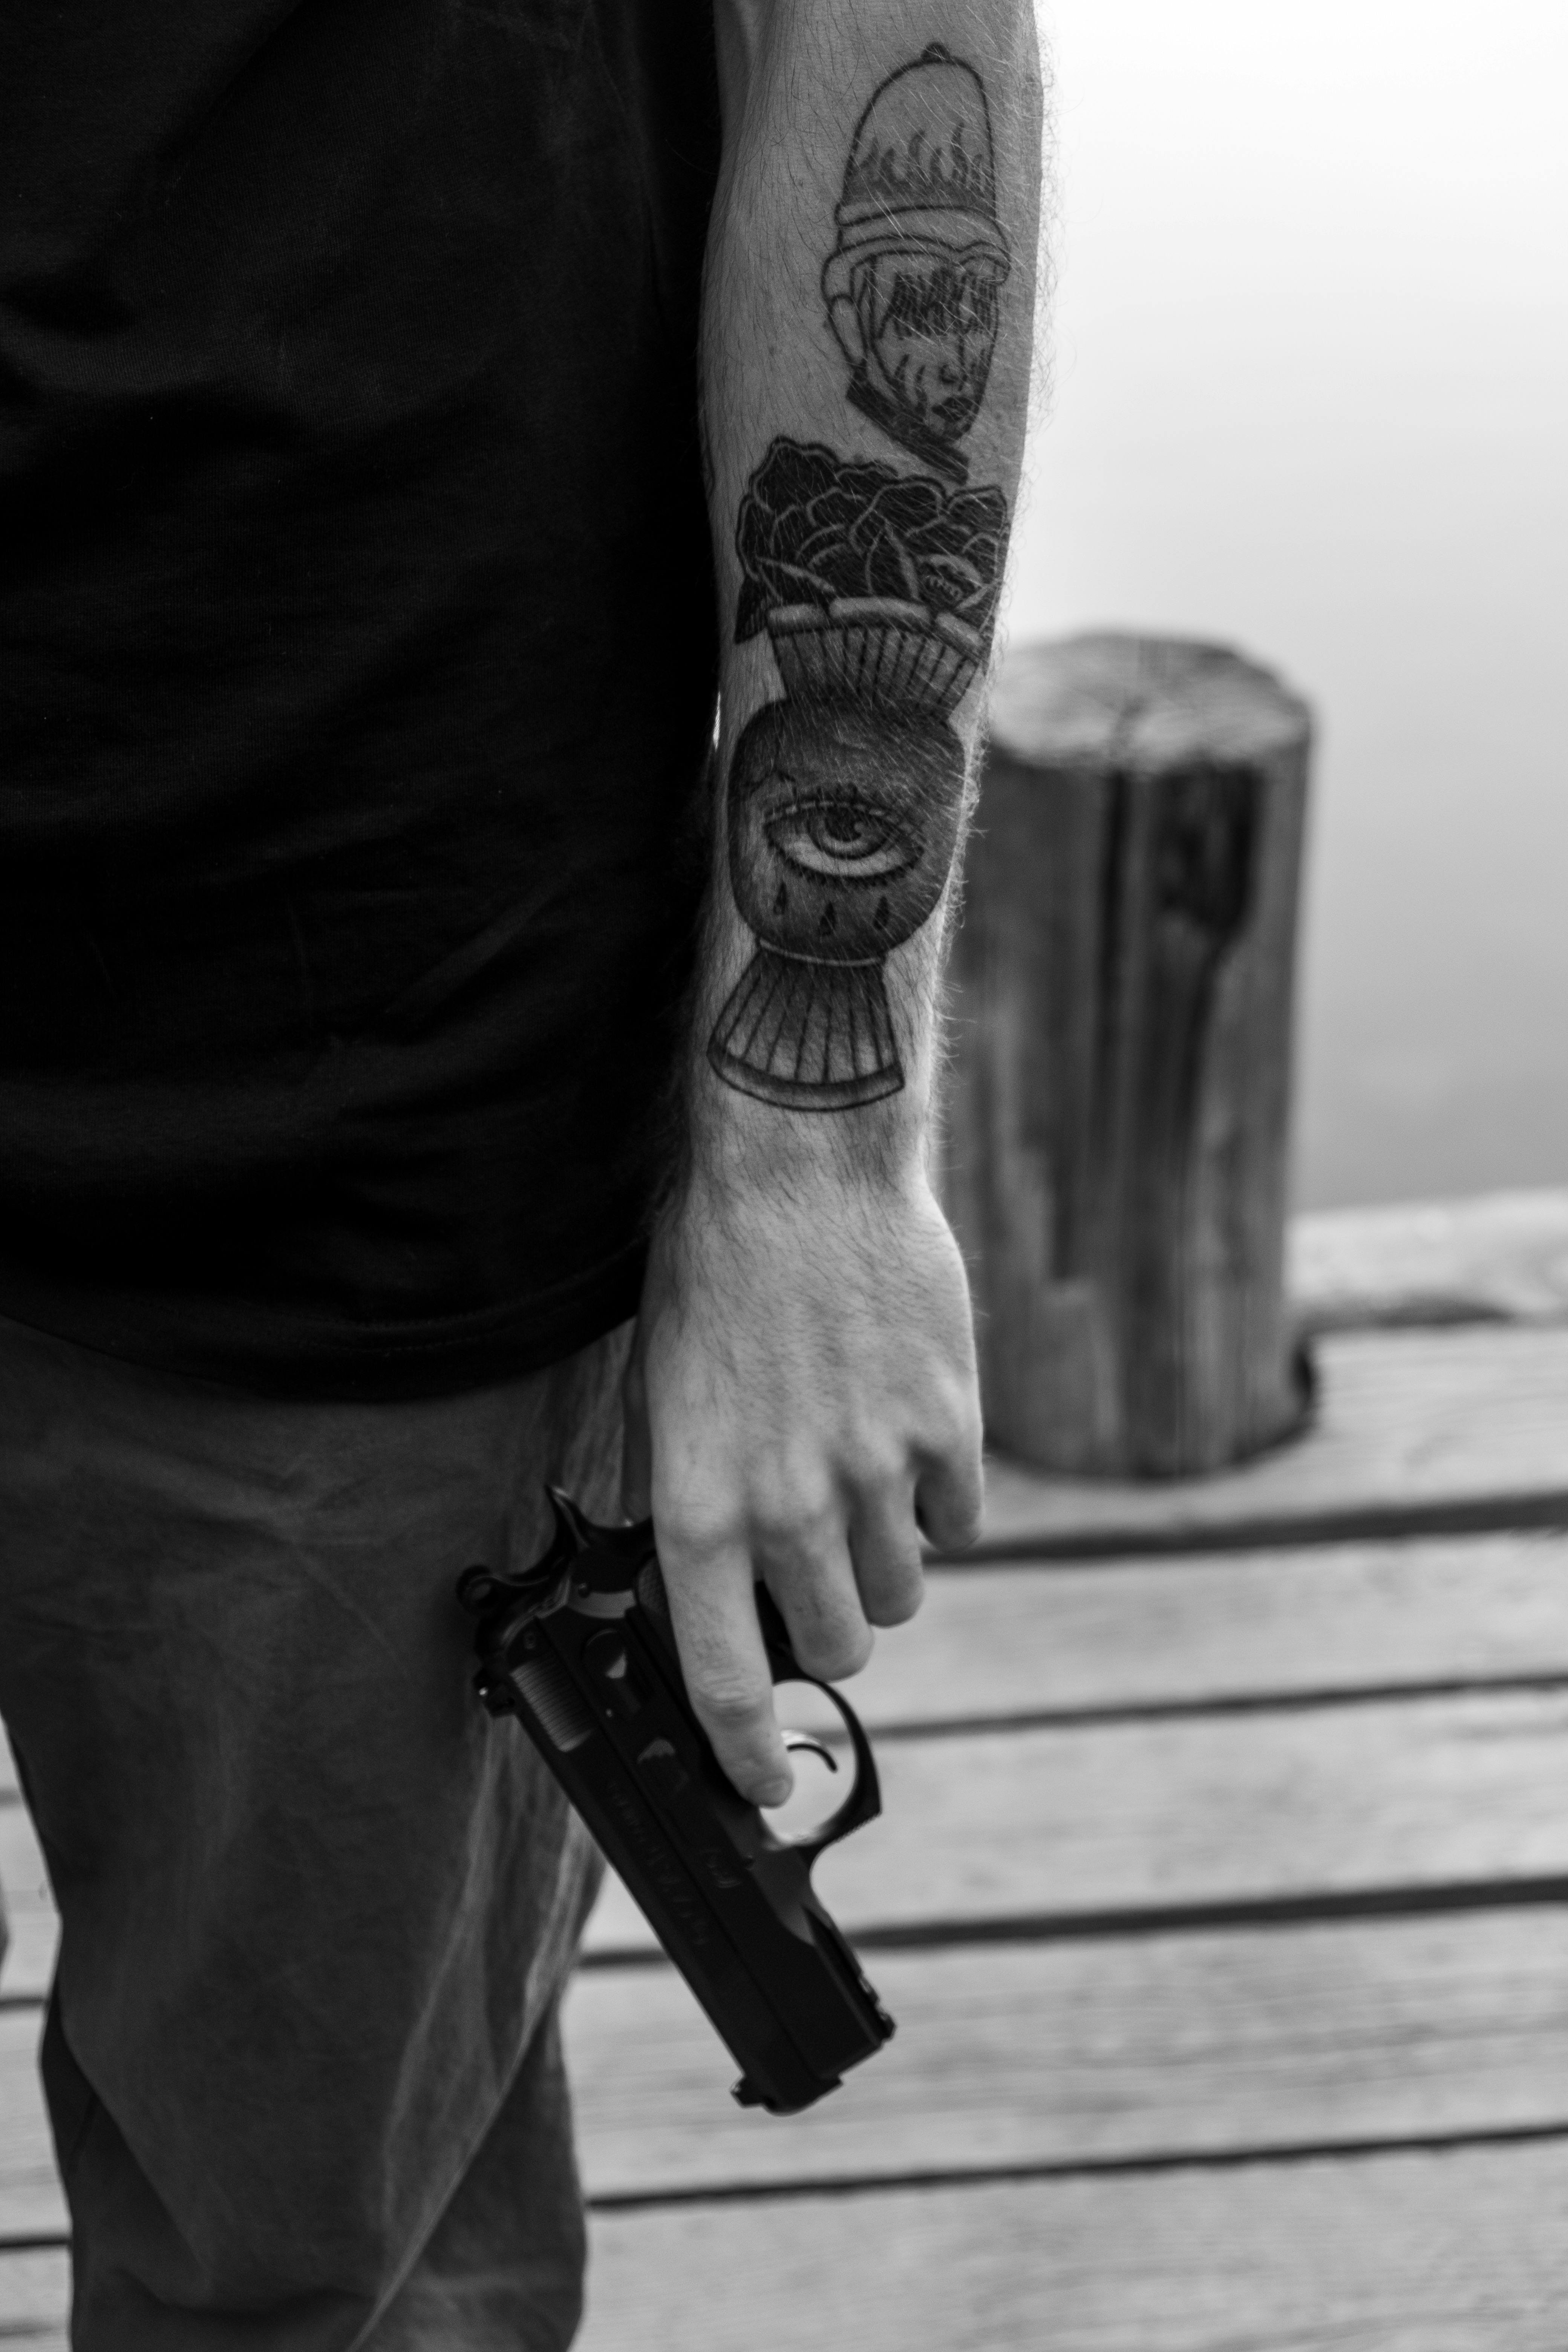 Drawing a Gun Tattoo | Weapon Tattoo Design - YouTube